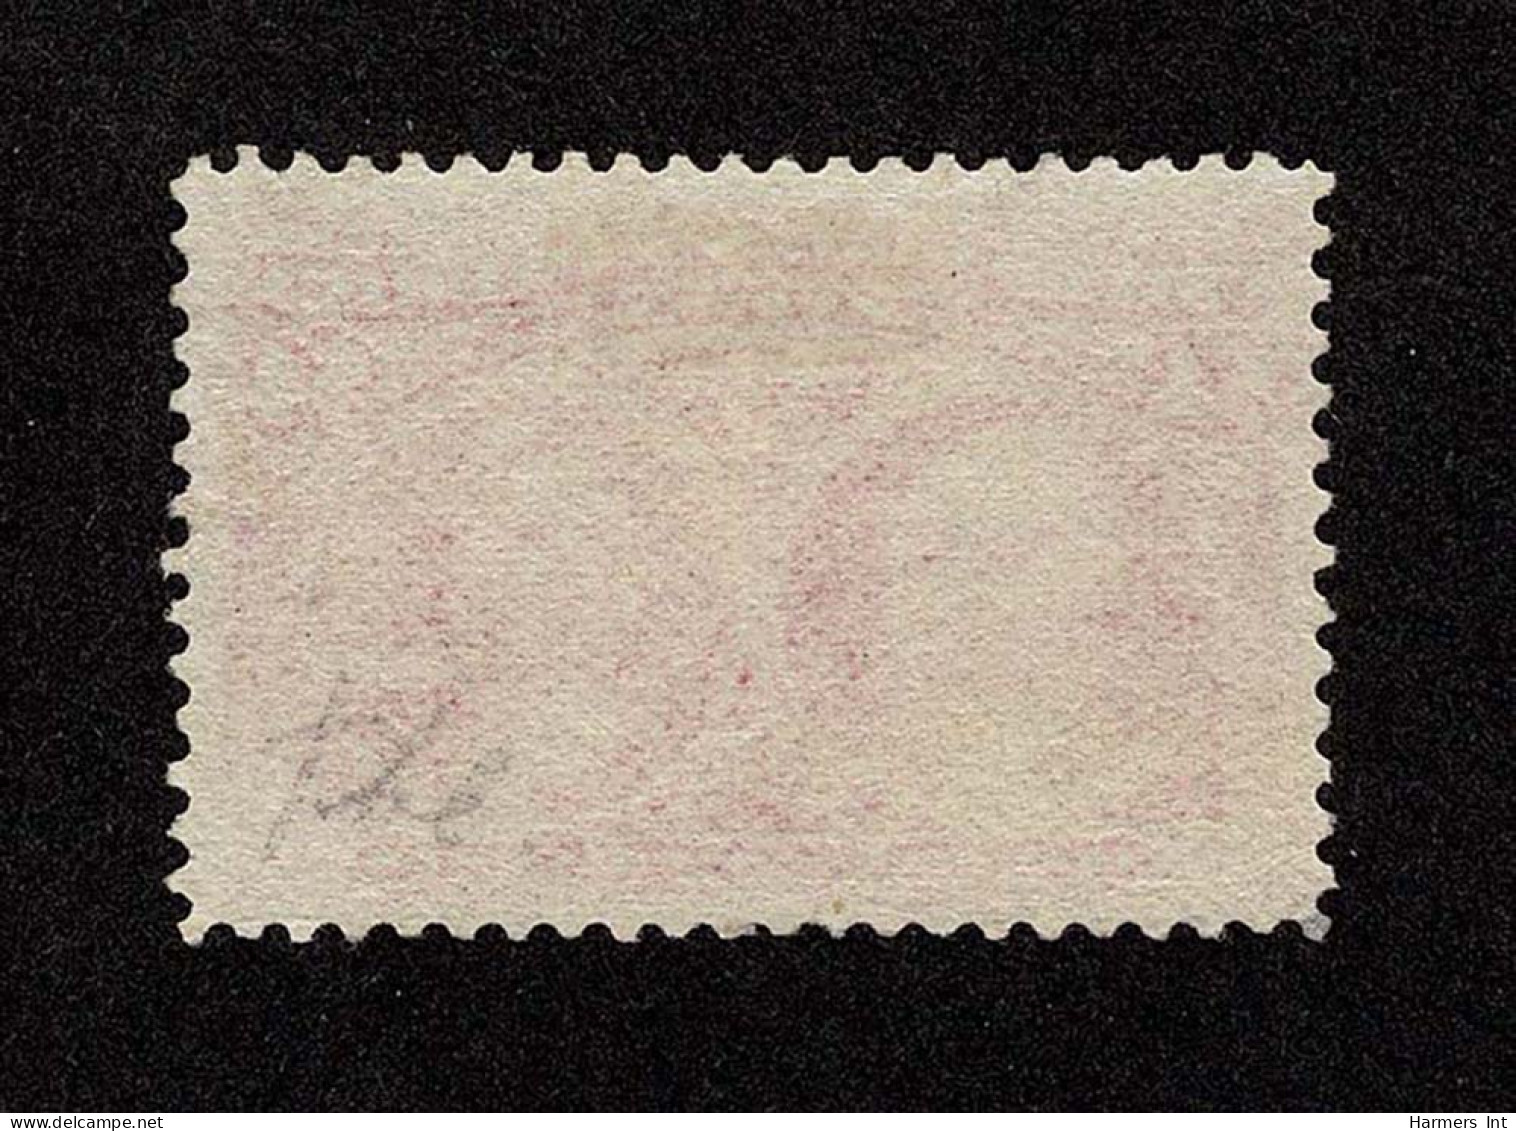 Lot # 051 1893 Columbian Issue, $4 Crimson Lake - Unused Stamps